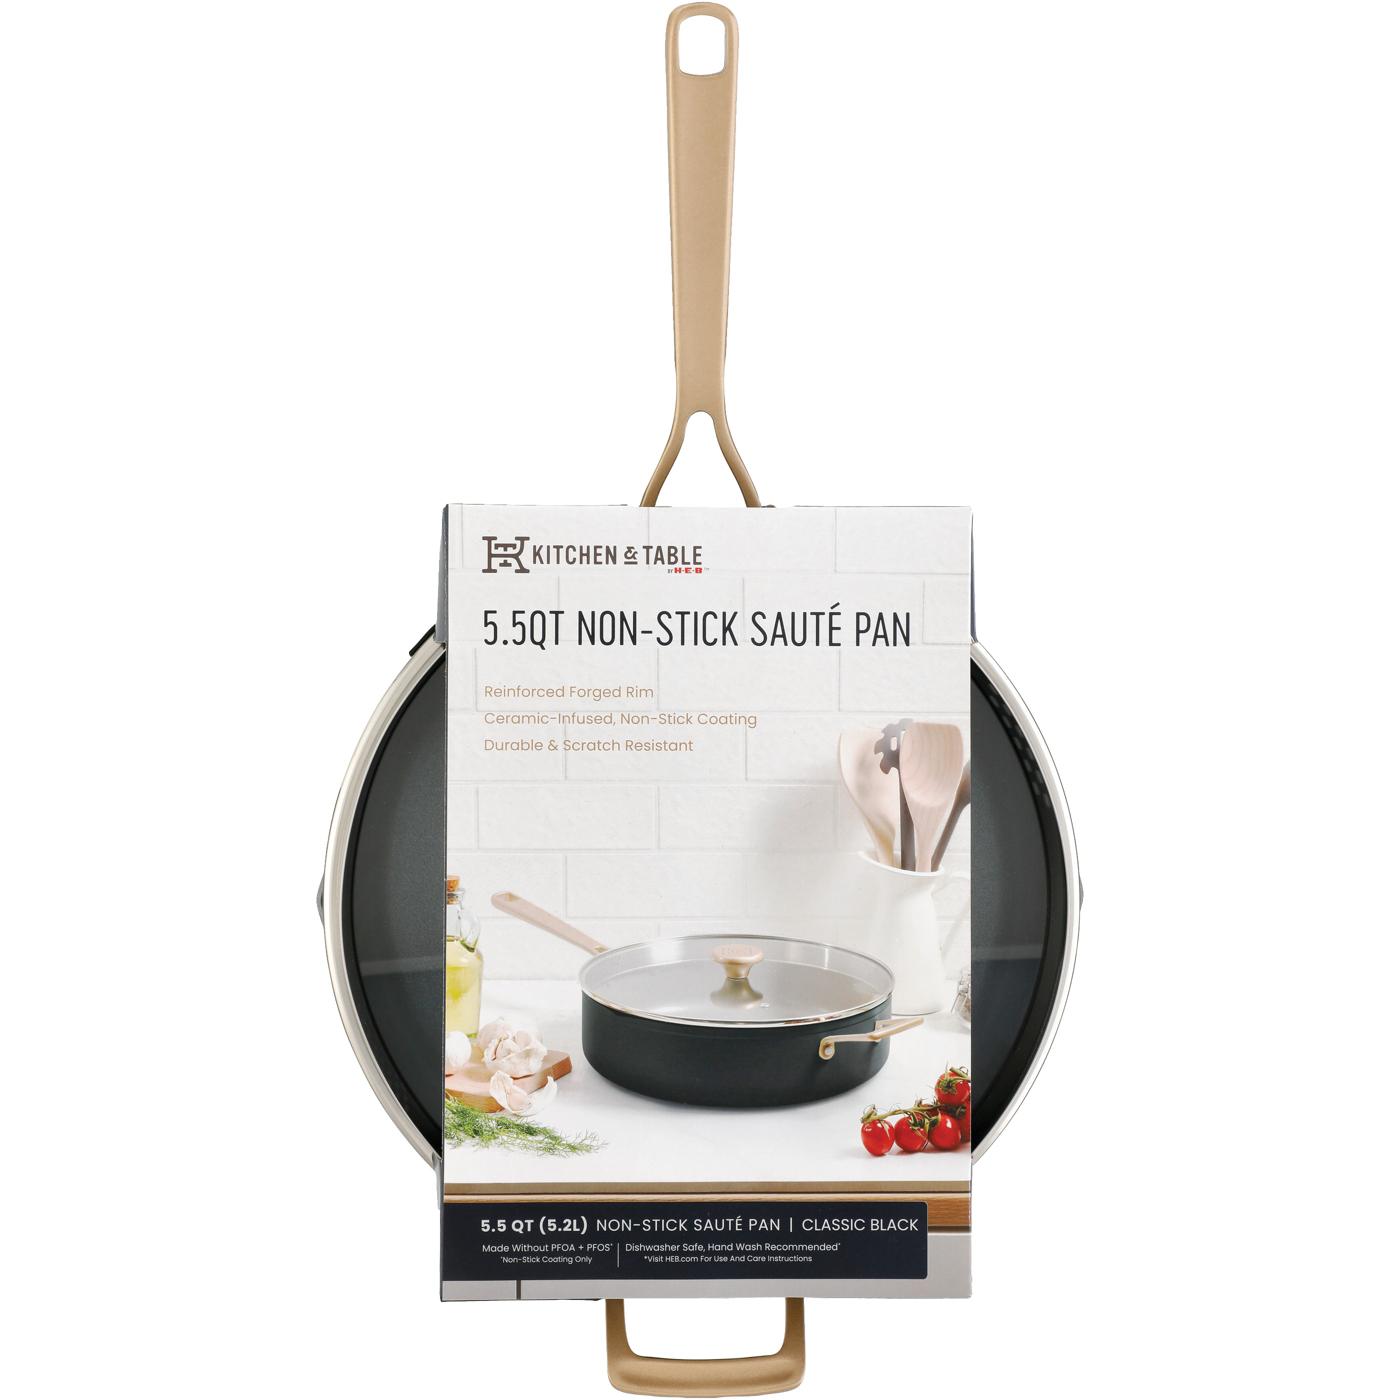 Multi-Purpose Non-Stick Frying Pan with Lid - Durable, Versatile